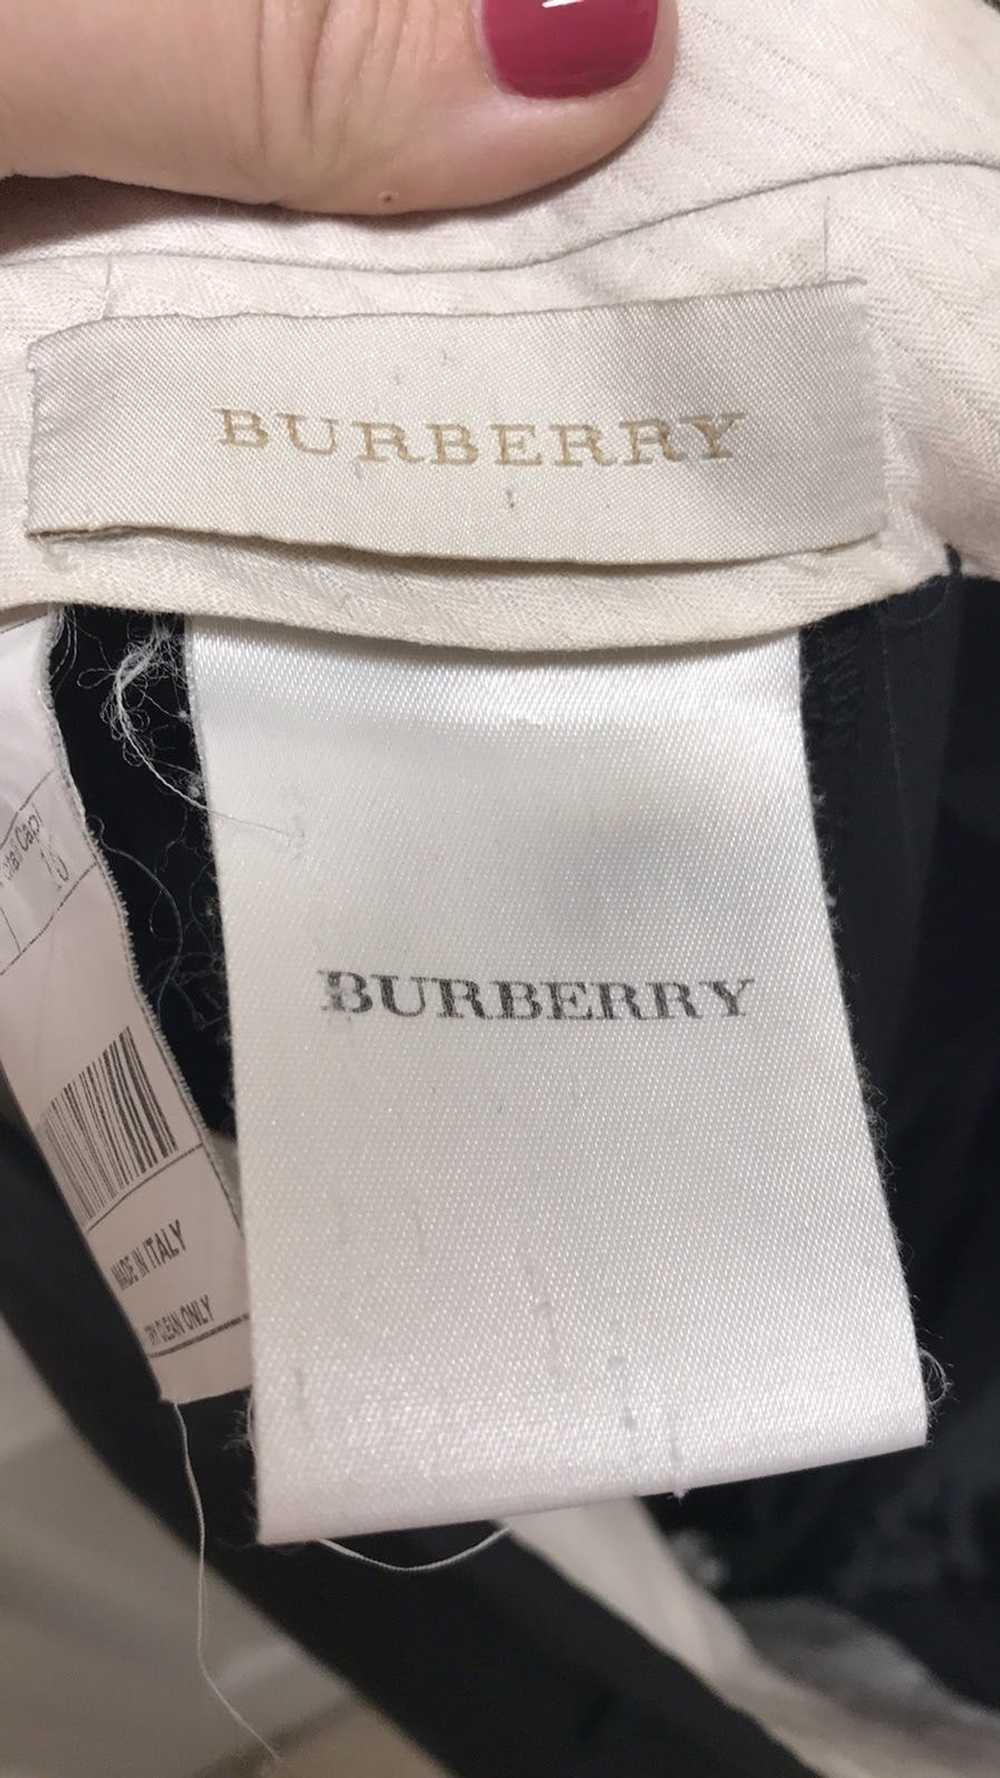 Burberry Burberry wool dress pants - image 5